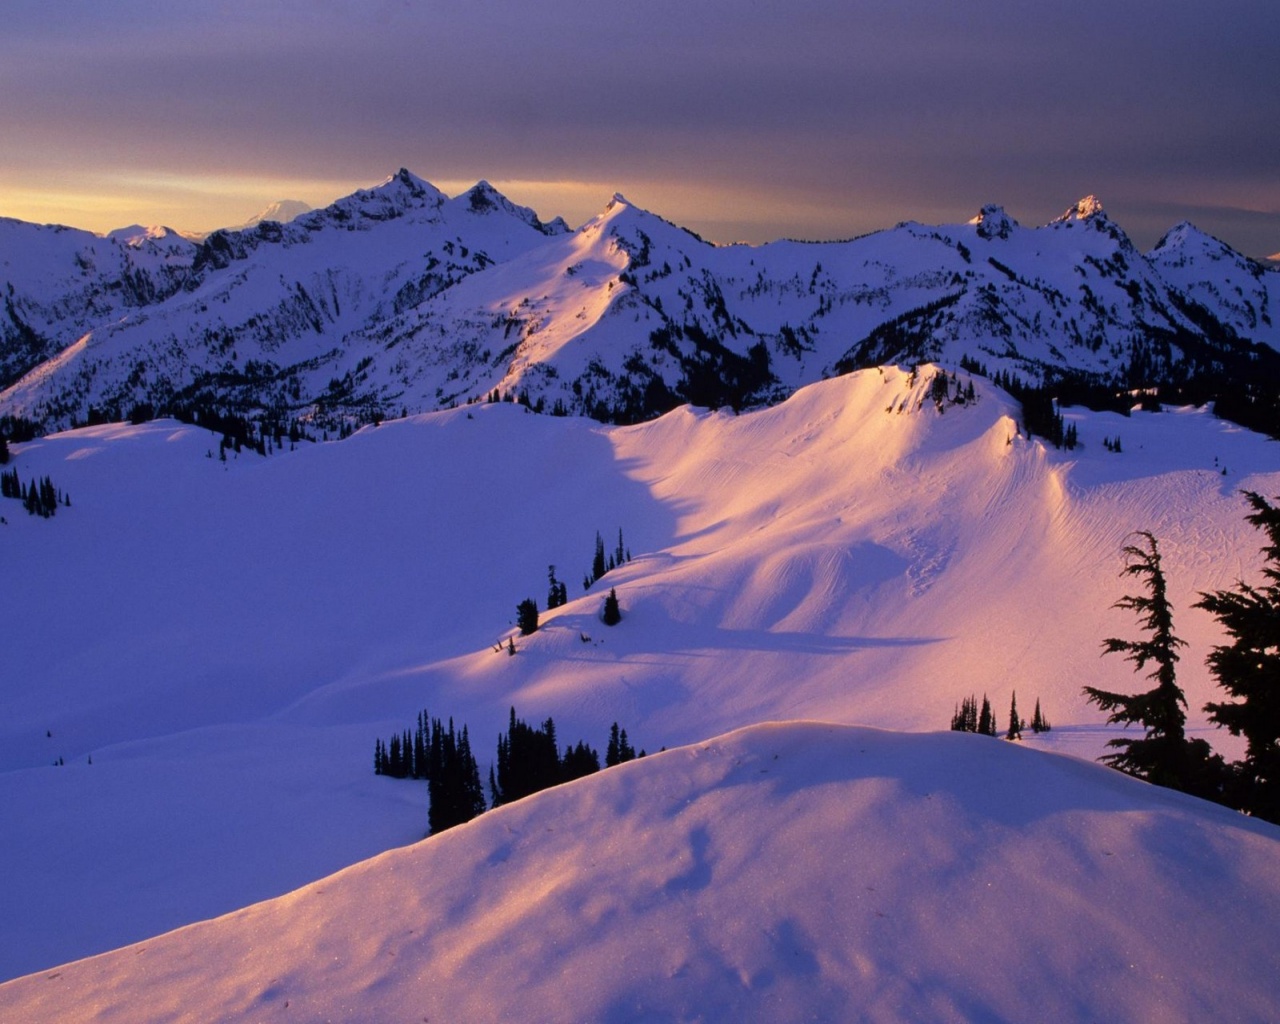 Poze Iarna la Munte: Poze Iarna Munte Imagini Montane Zapada in Munti